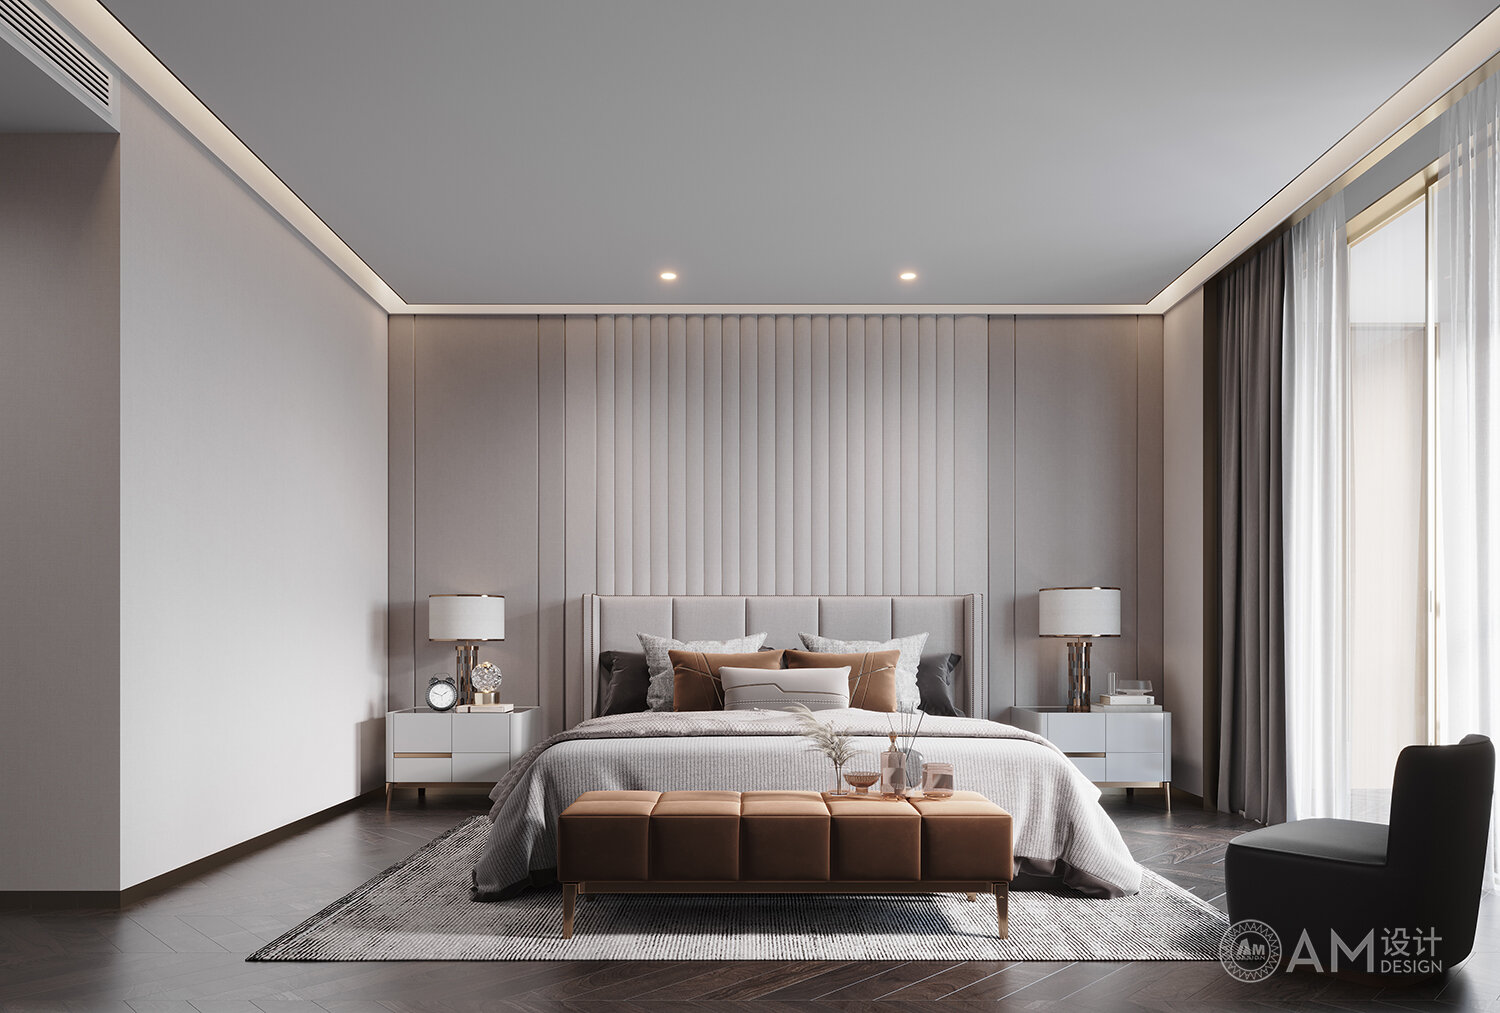 AM DESIGN | Master bedroom design of Shangluo Mansion, Shaanxi